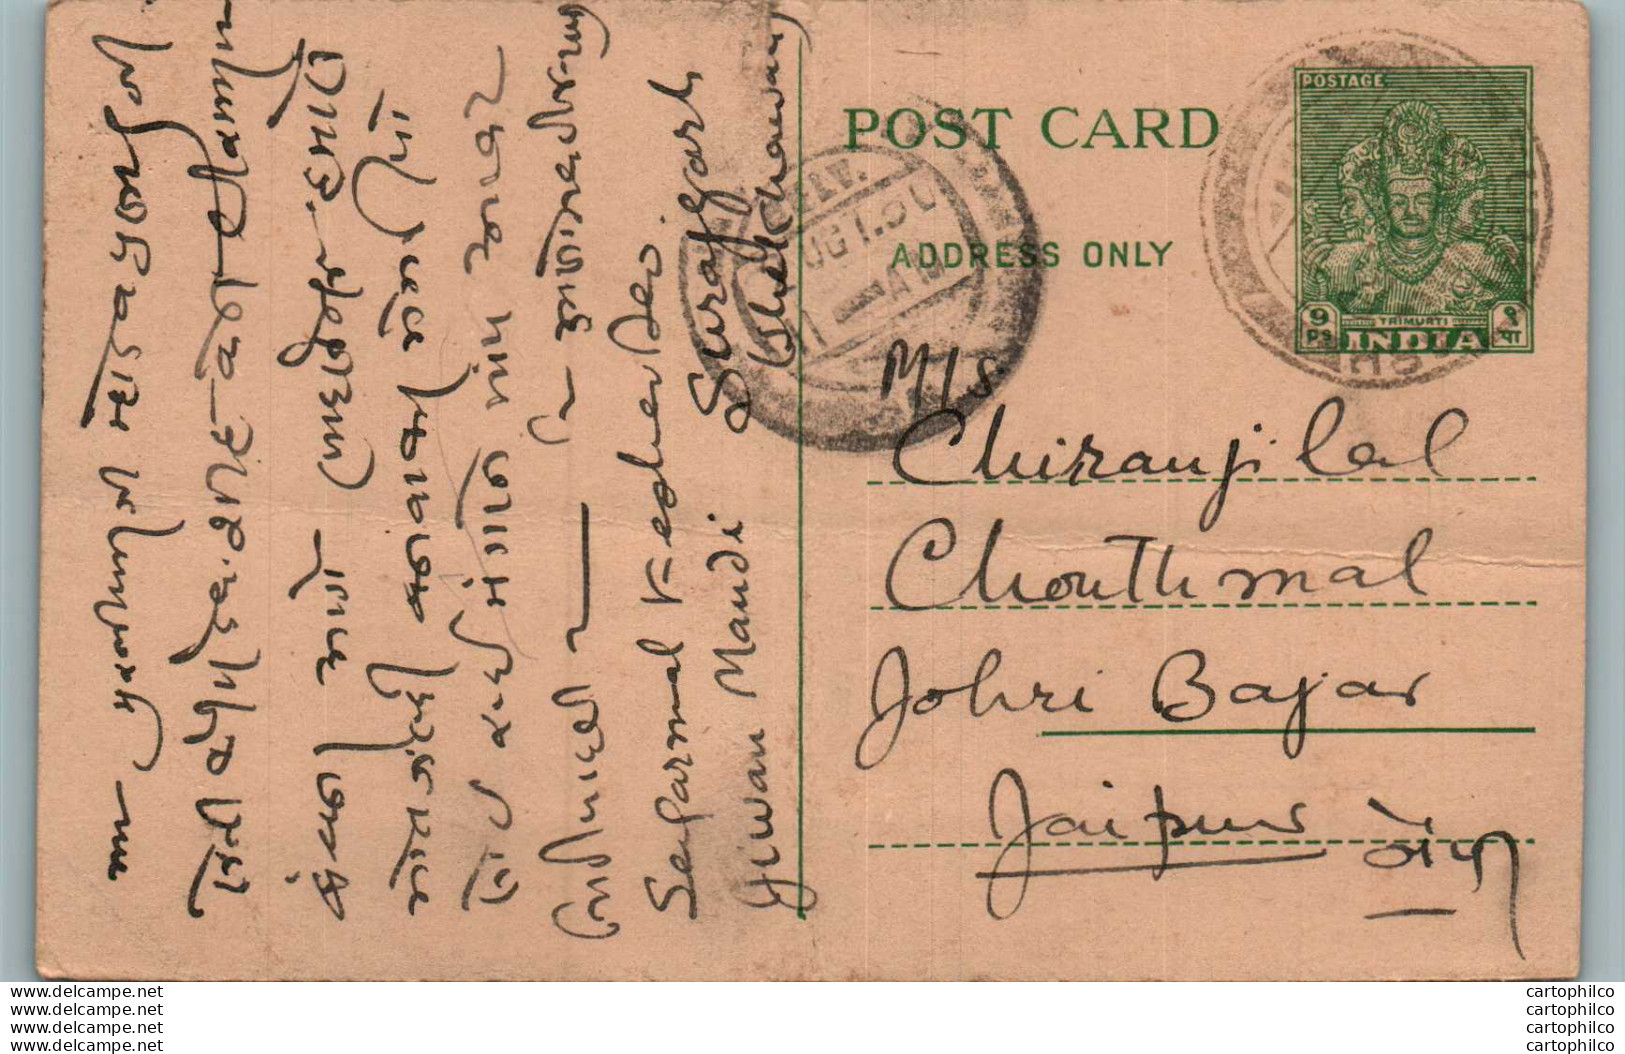 India Postal Stationery 9p Jaipur Cds - Cartes Postales